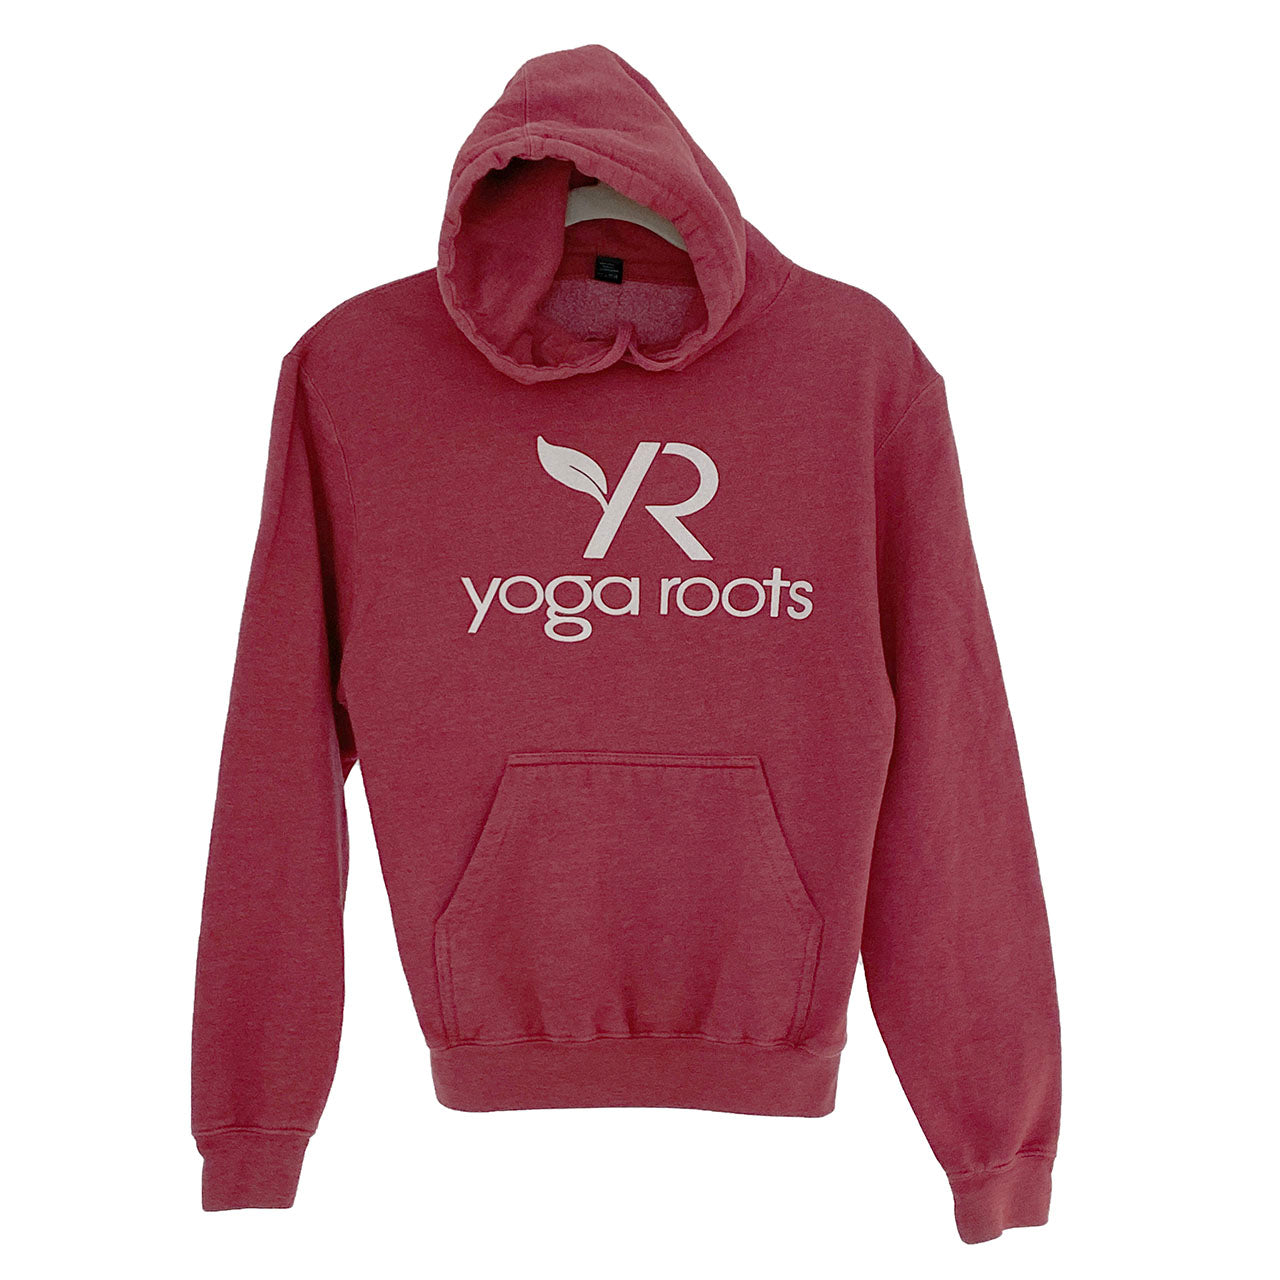 Yoga-Roots-Weathered-Red-Hoodie-Sweatshirt, Shop-ebargainsanddeals.com